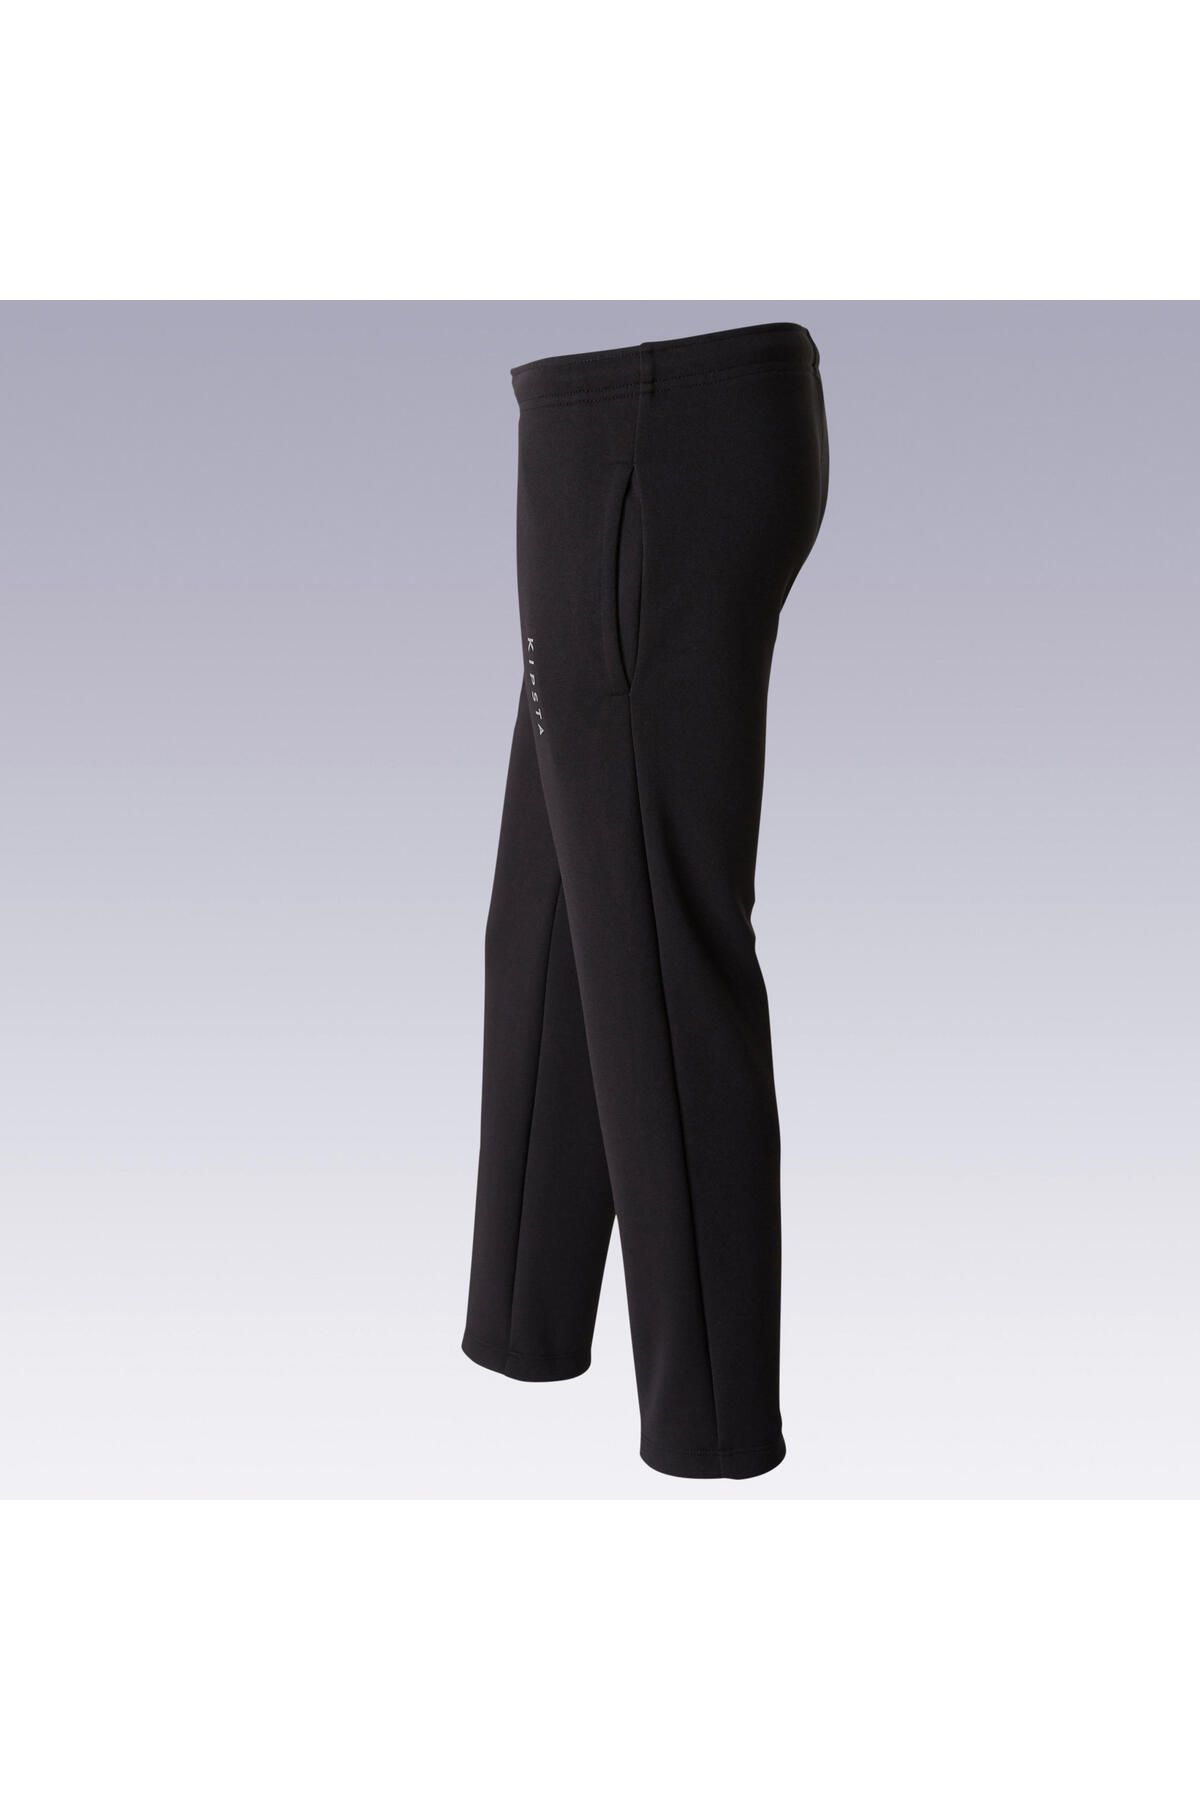 Decathlon Sports Sweatpants - Black - Normal Waist - Trendyol